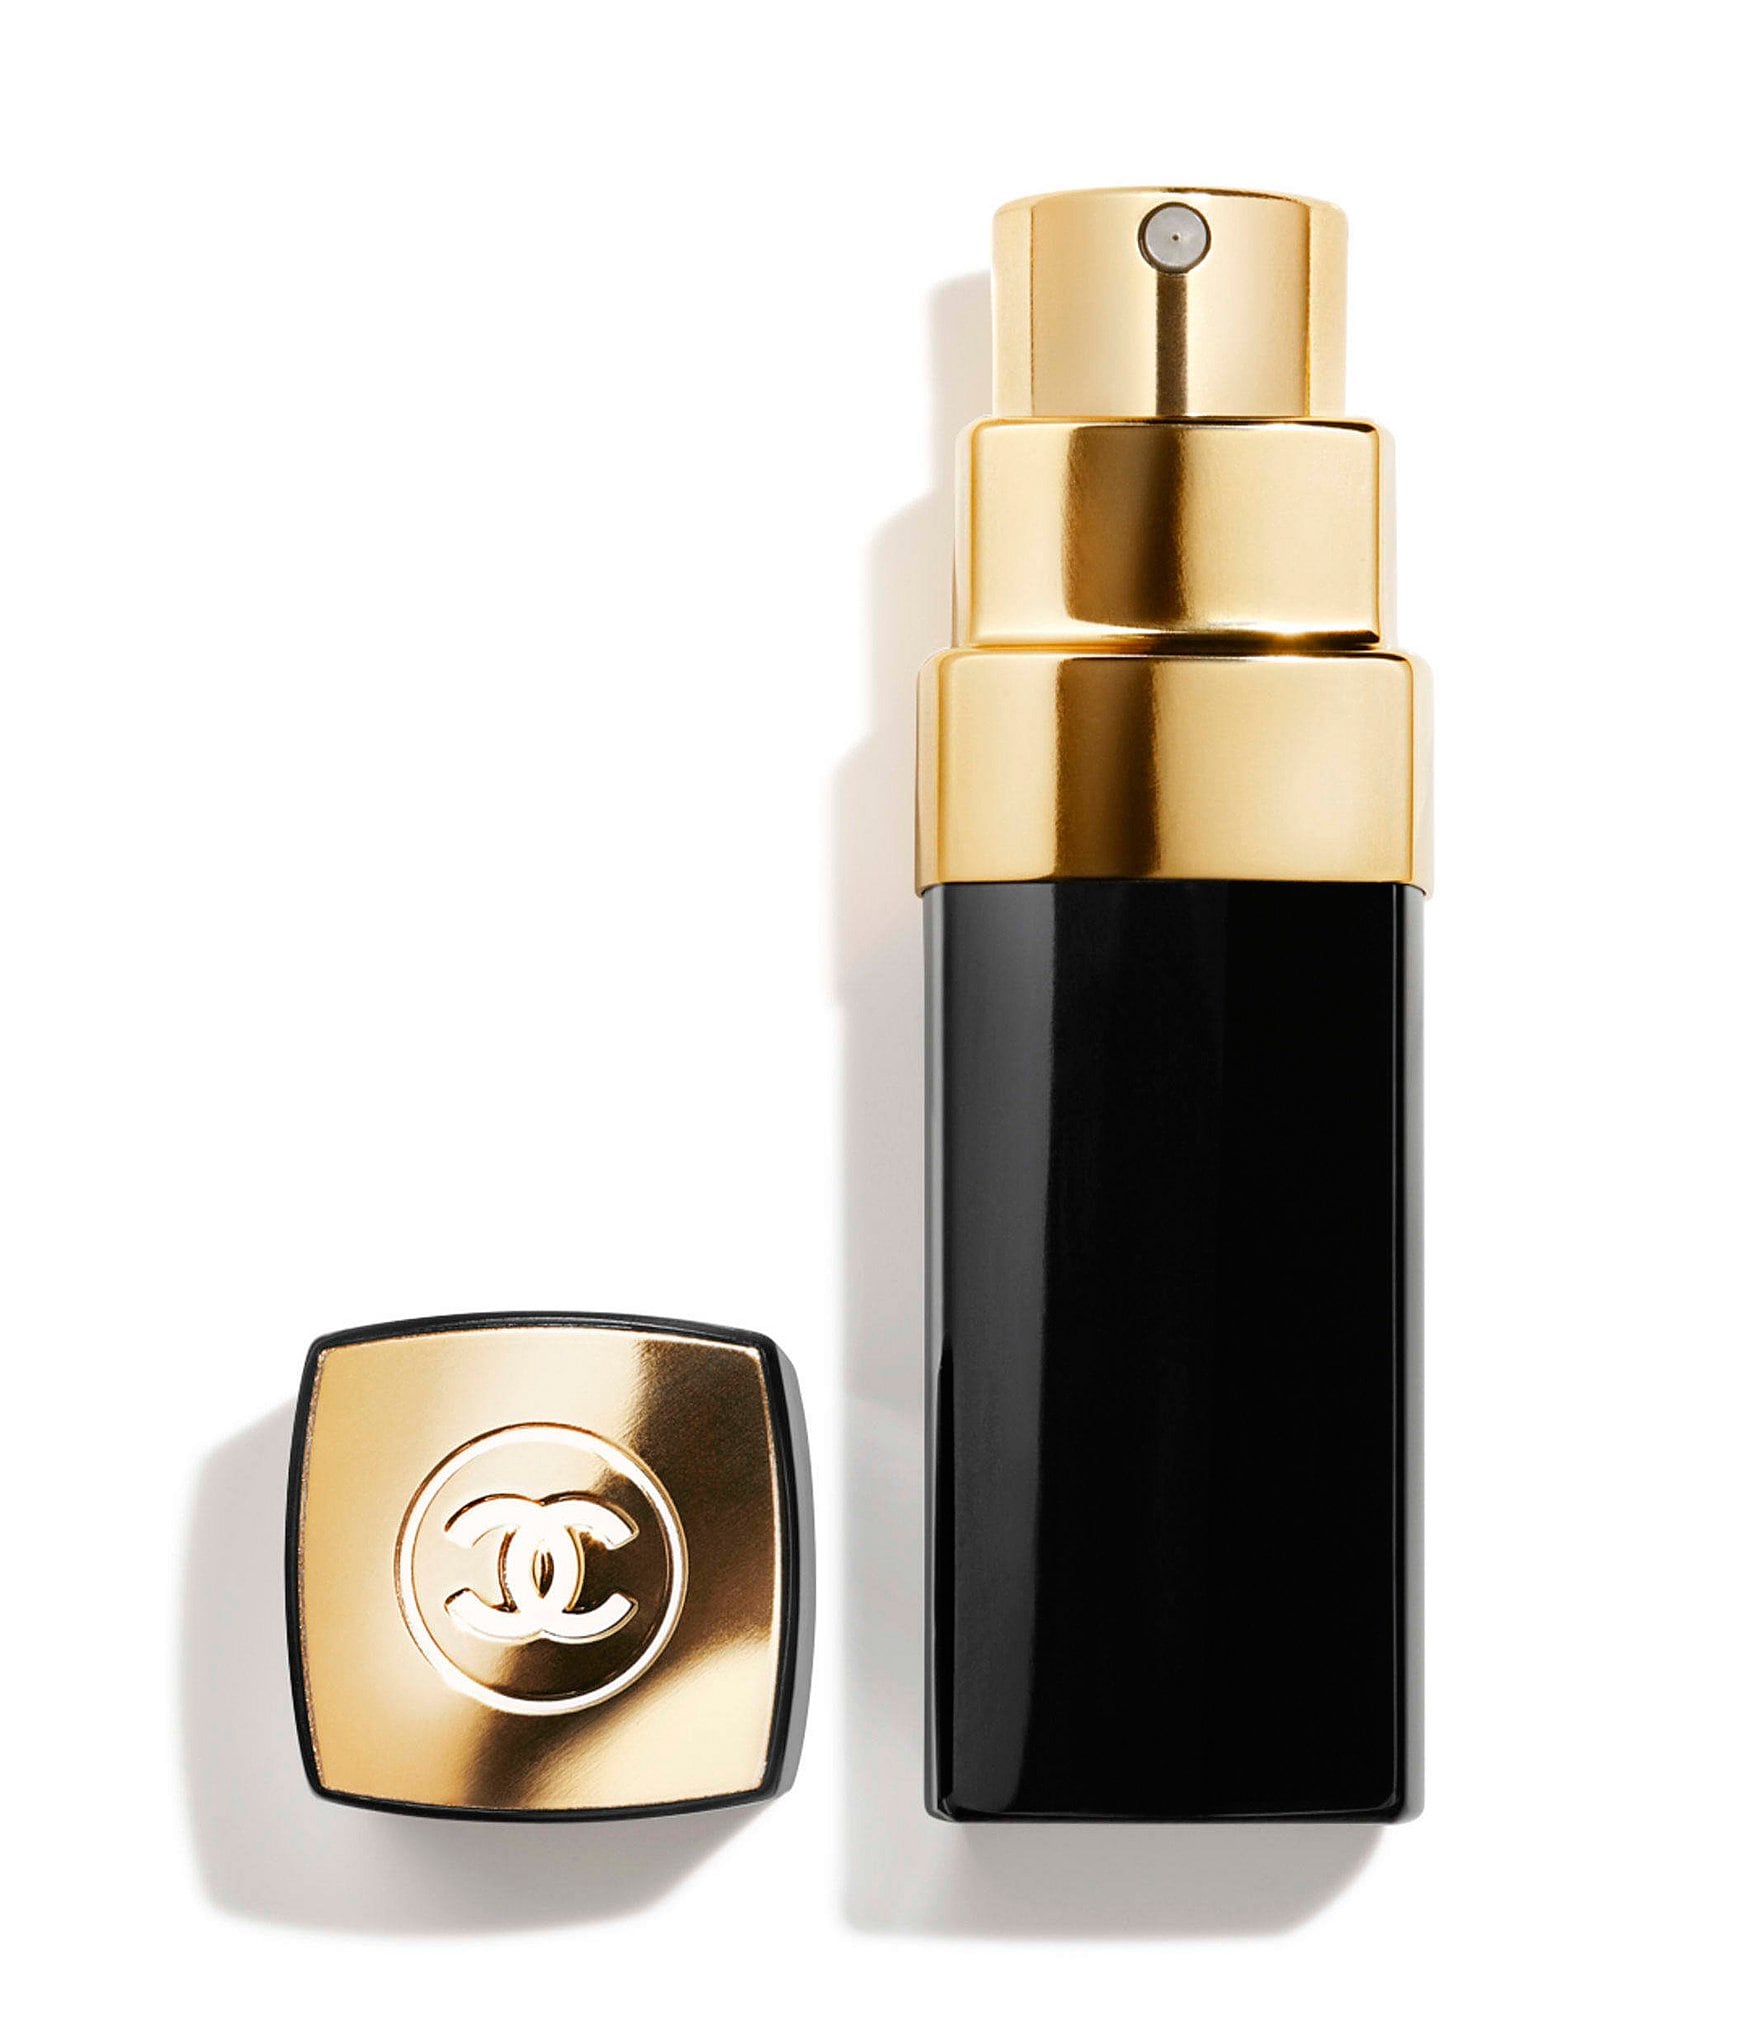 Chanel 5 Chanel Mujer - Luegopago